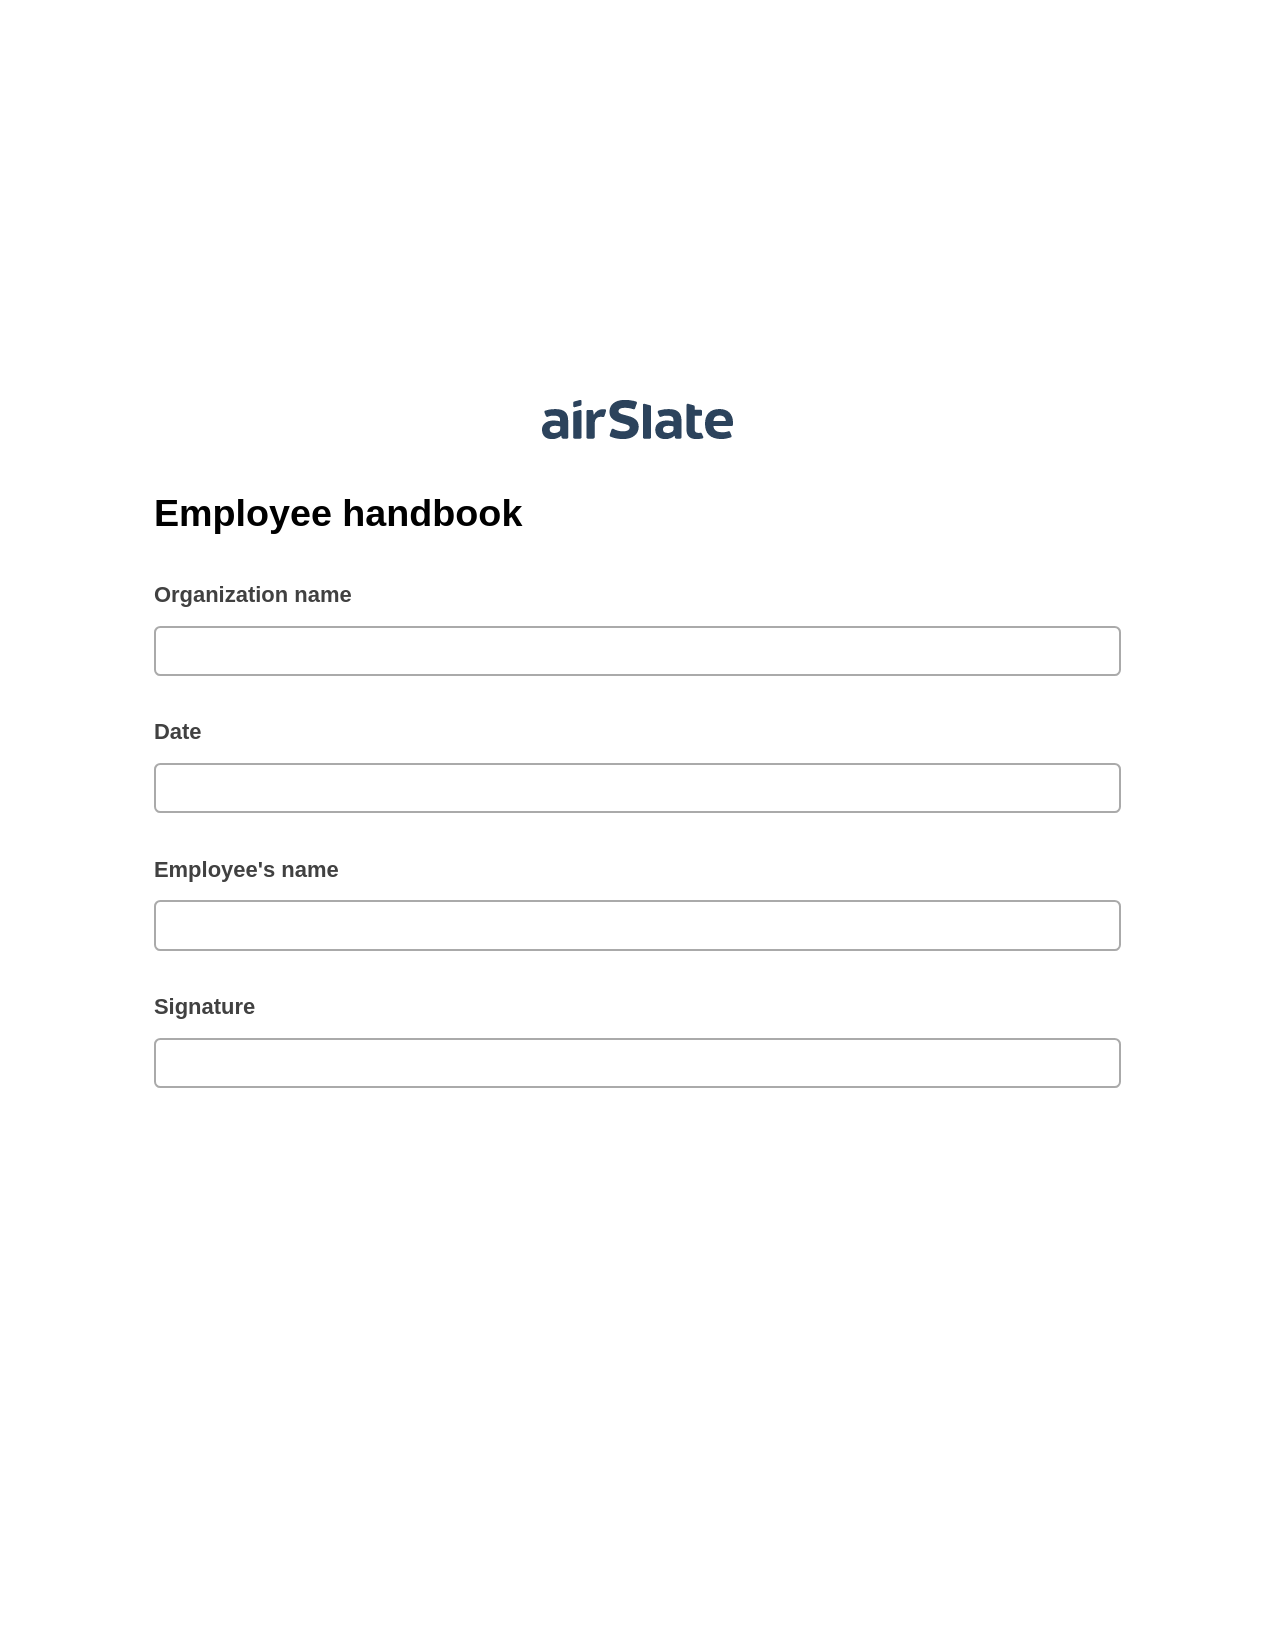 Employee handbook Pre-fill Slate from MS Dynamics 365 Records Bot, Pre-fill with Custom Data Bot, Webhook Postfinish Bot